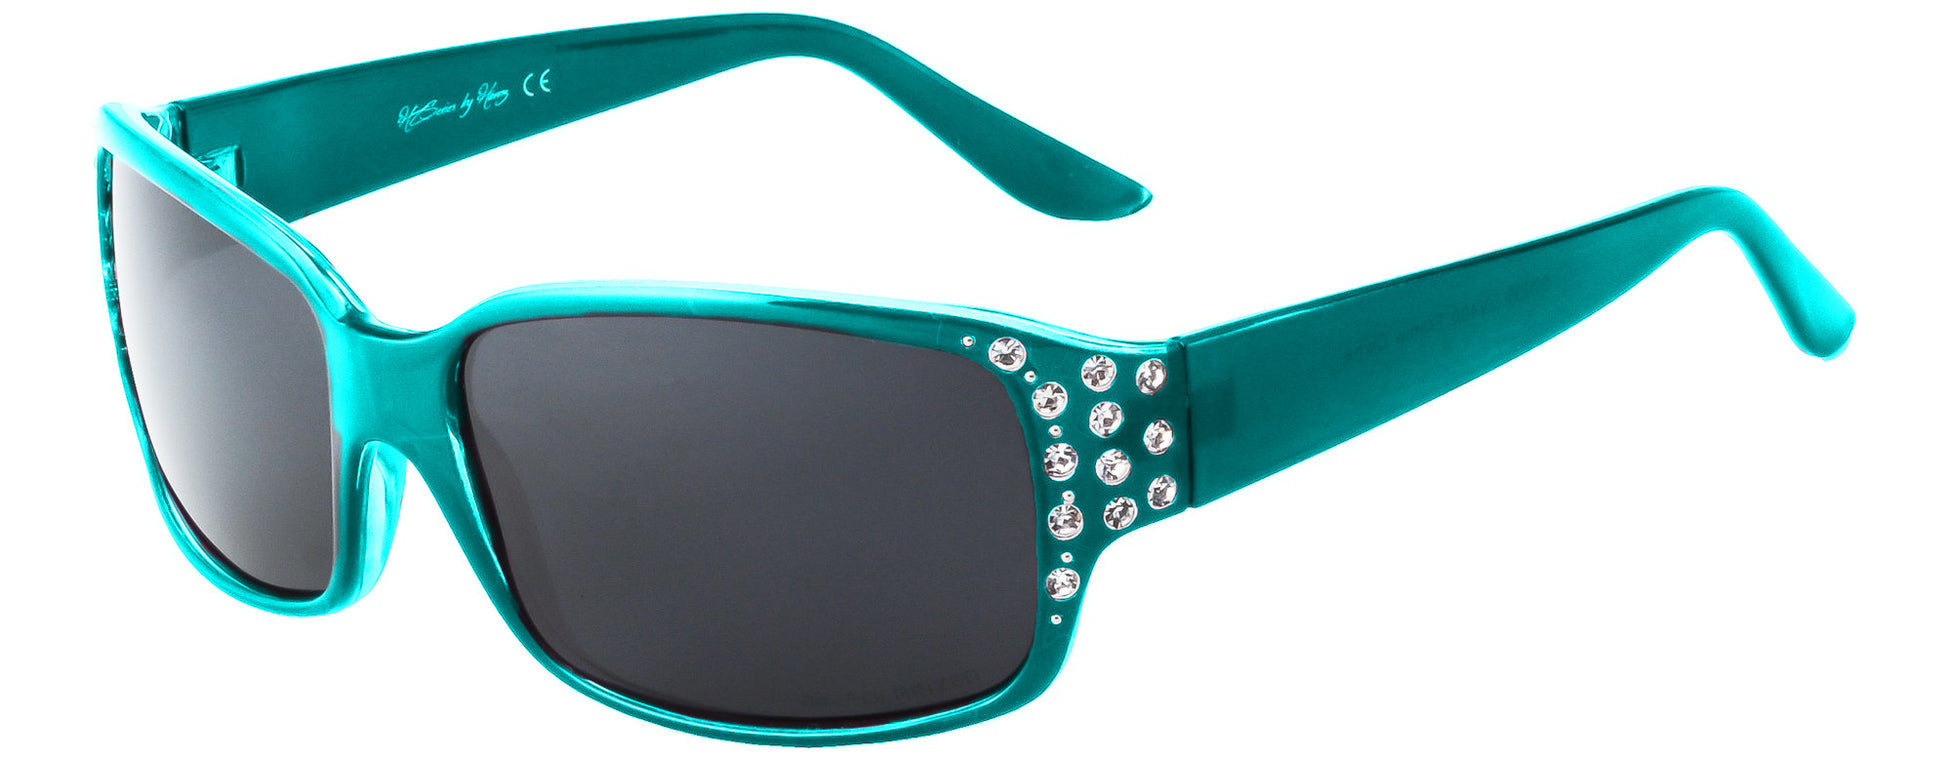 Main image: Polarized Sunglasses for Women - Premium Teal Fashion Sunglasses - HZ Series Diamante Womens Designer Sunglasses